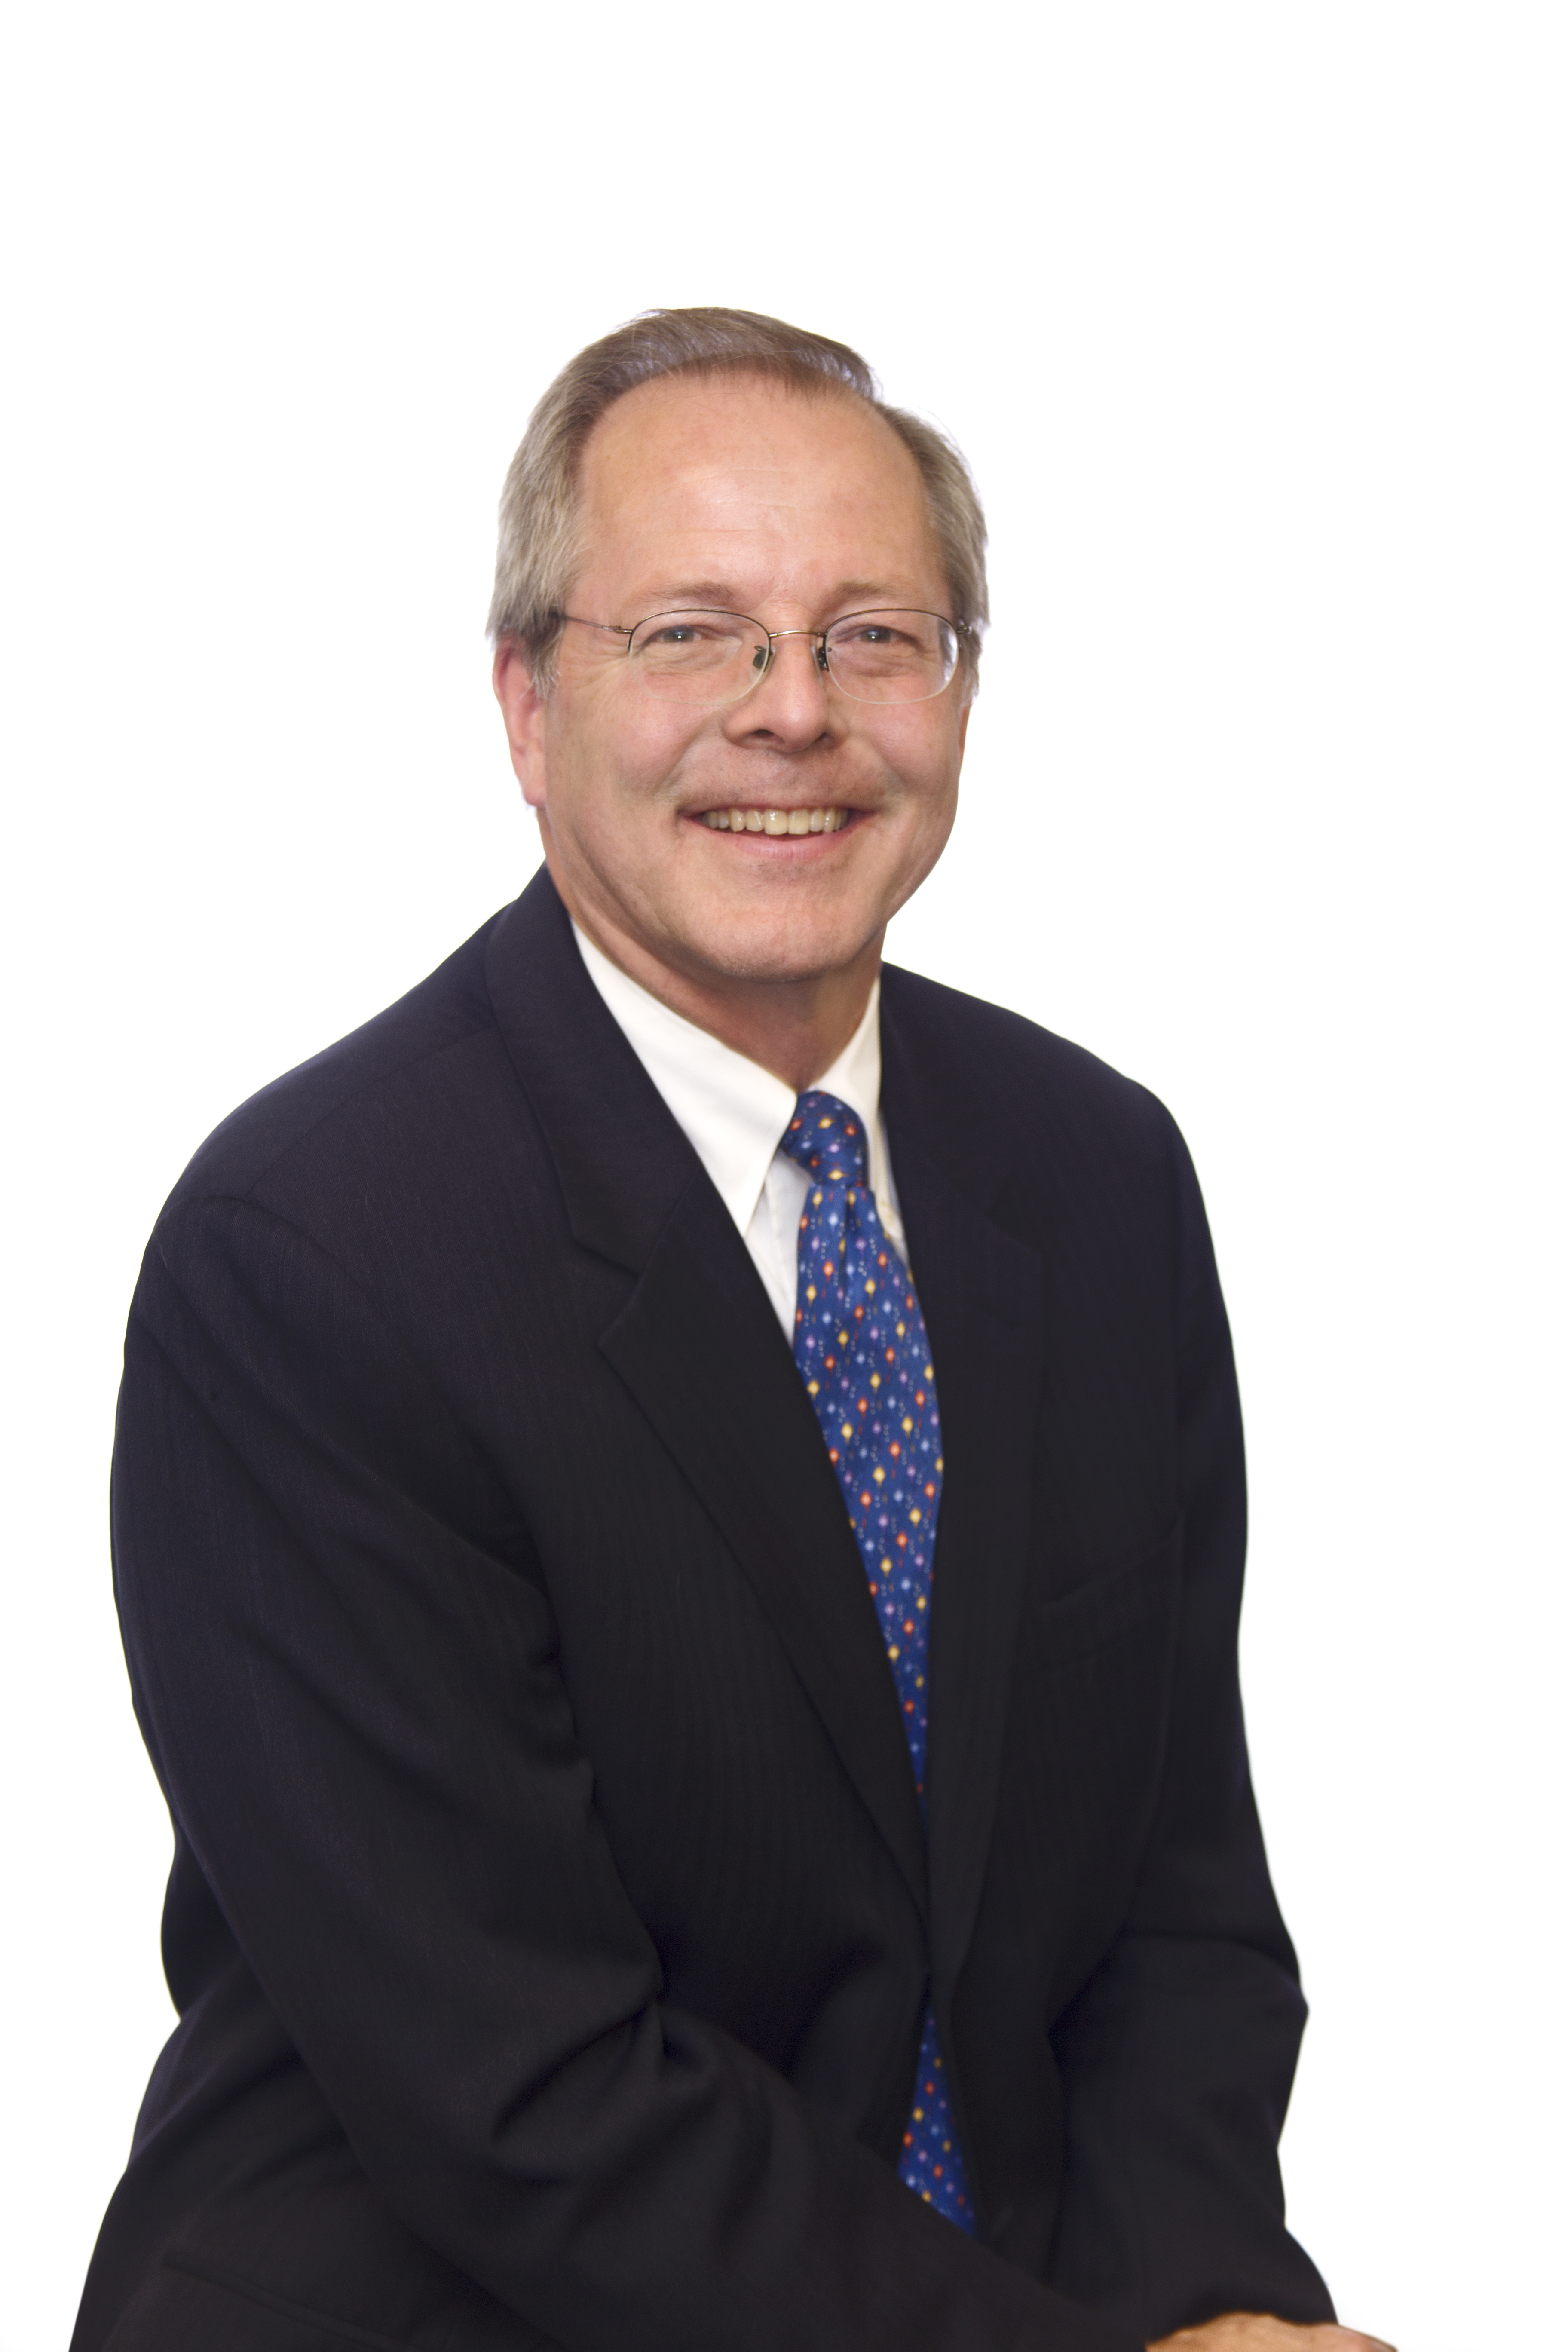 William J. Merritt, president and CEO of InterDigital